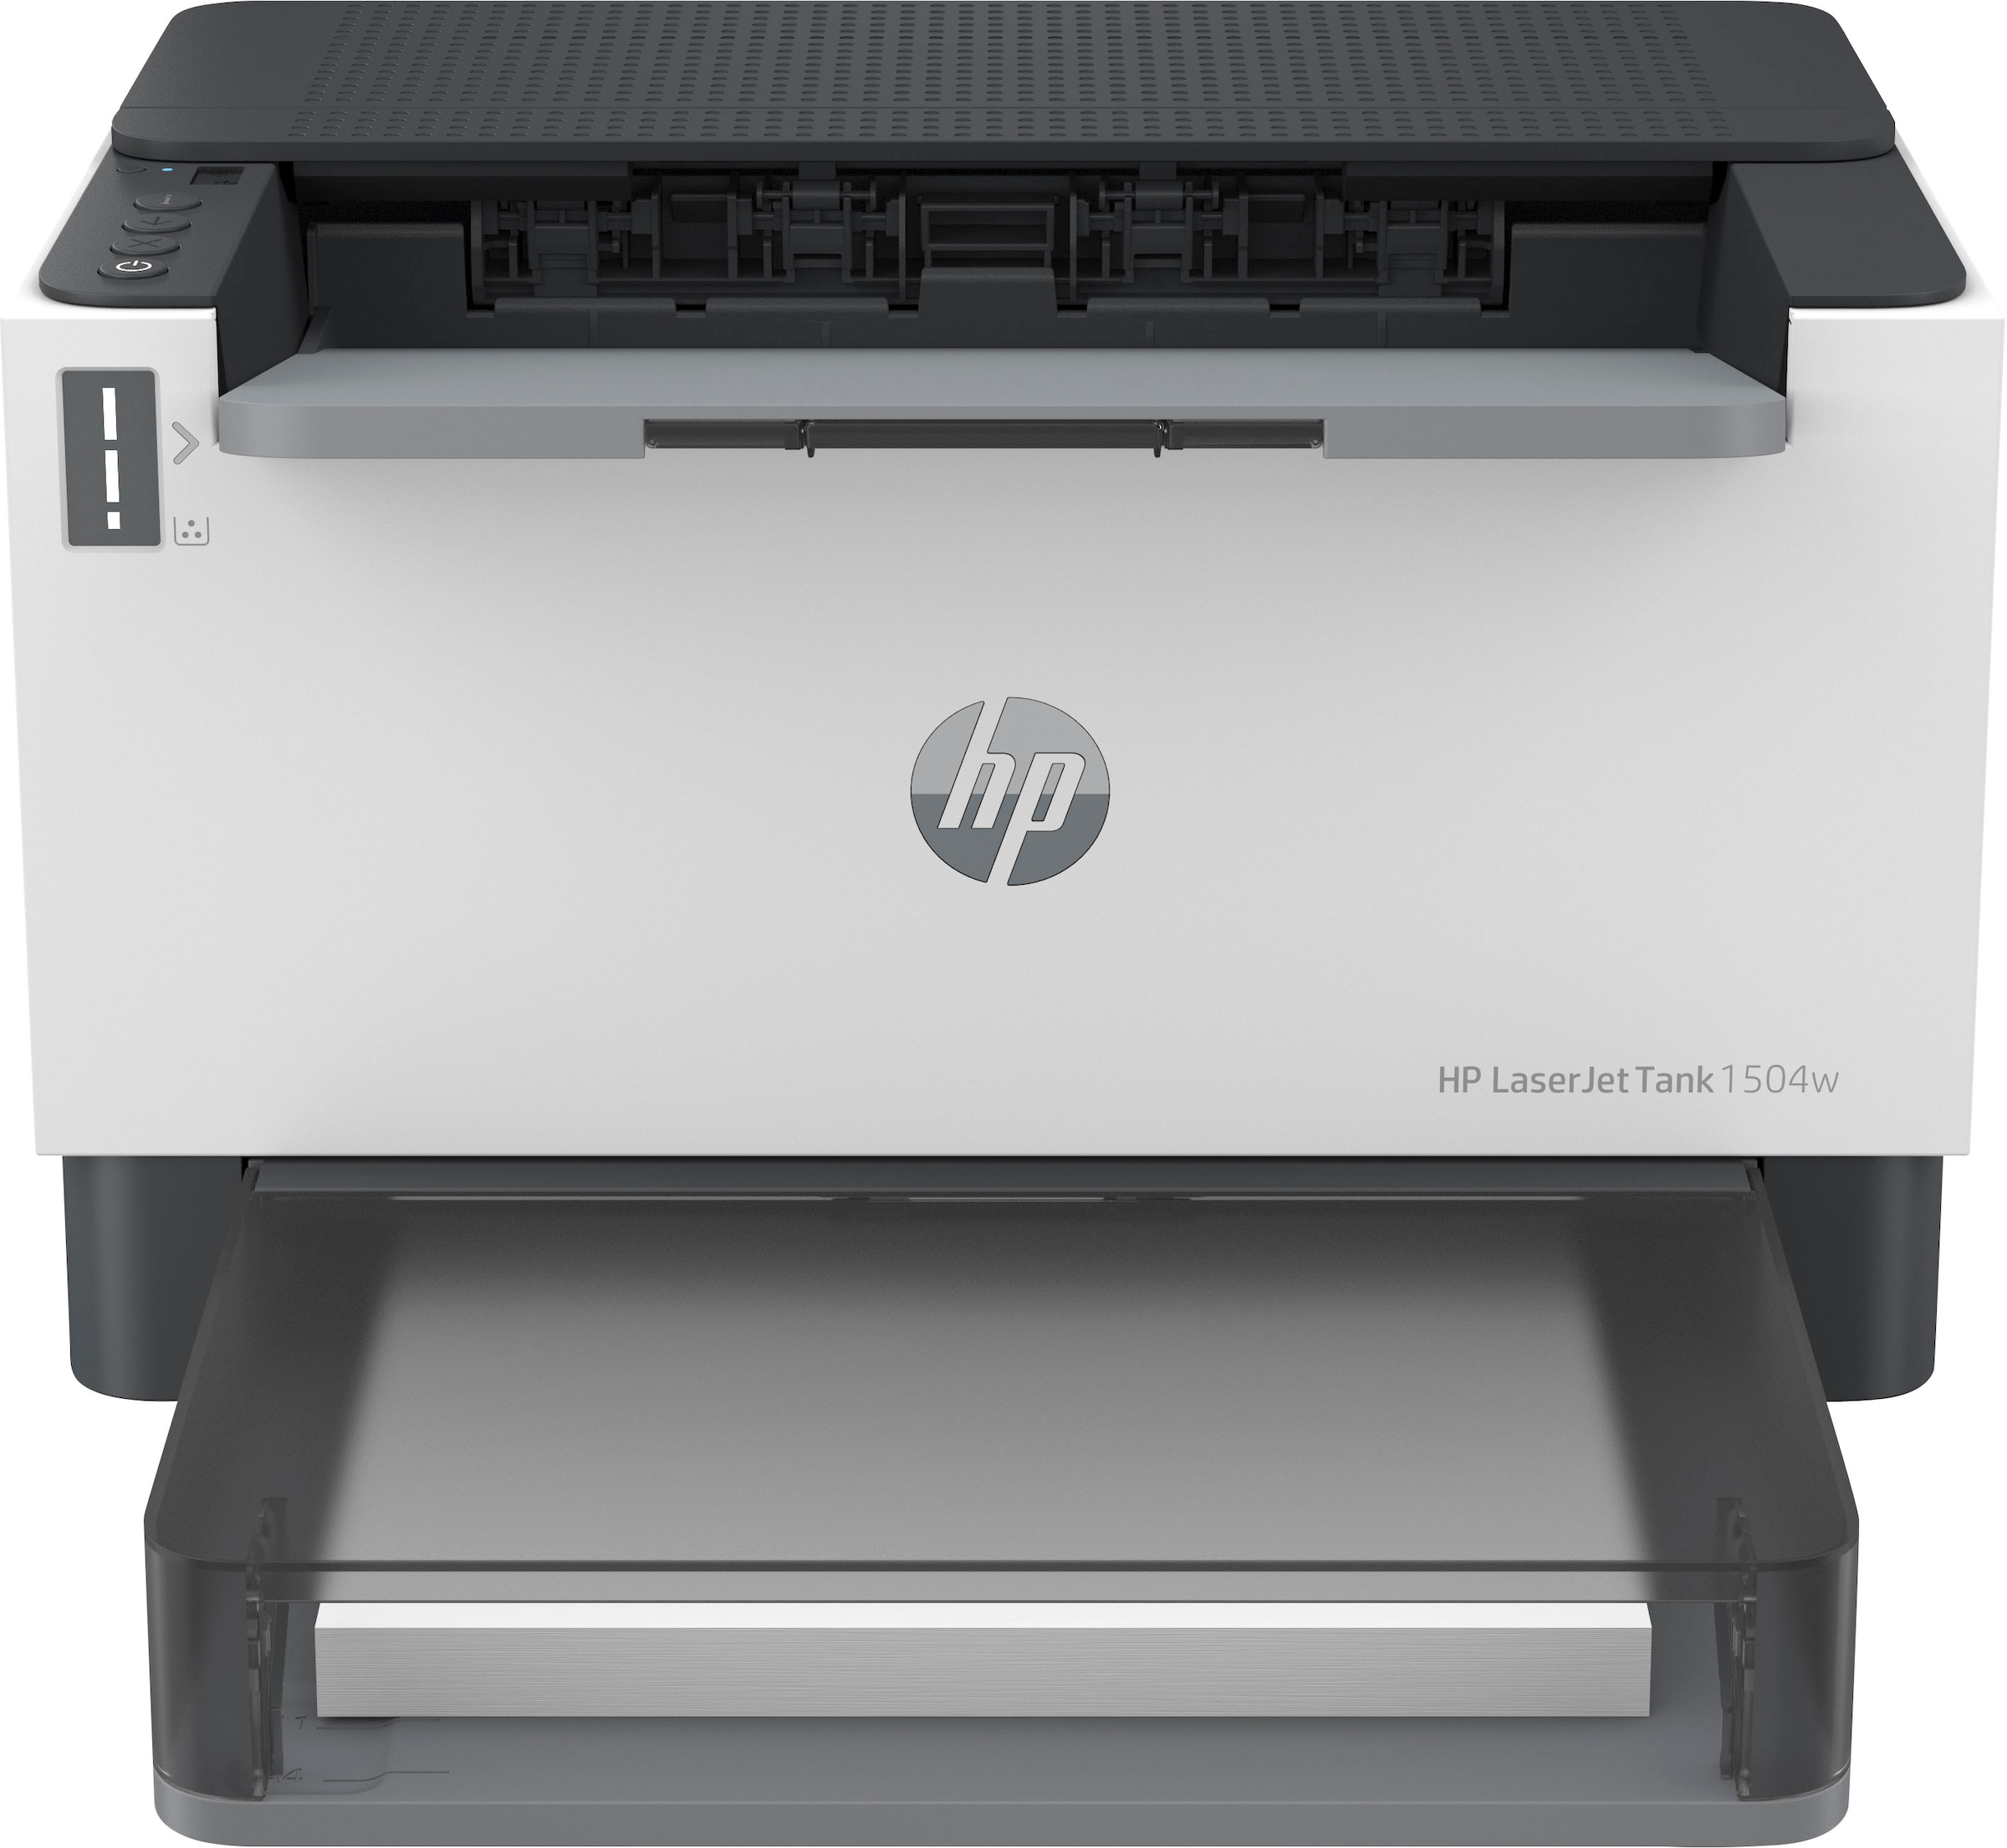 HP »LaserJet Ink 1504w«, Laserdrucker HP bestellen auf Instant Tank Rechnung kompatibel